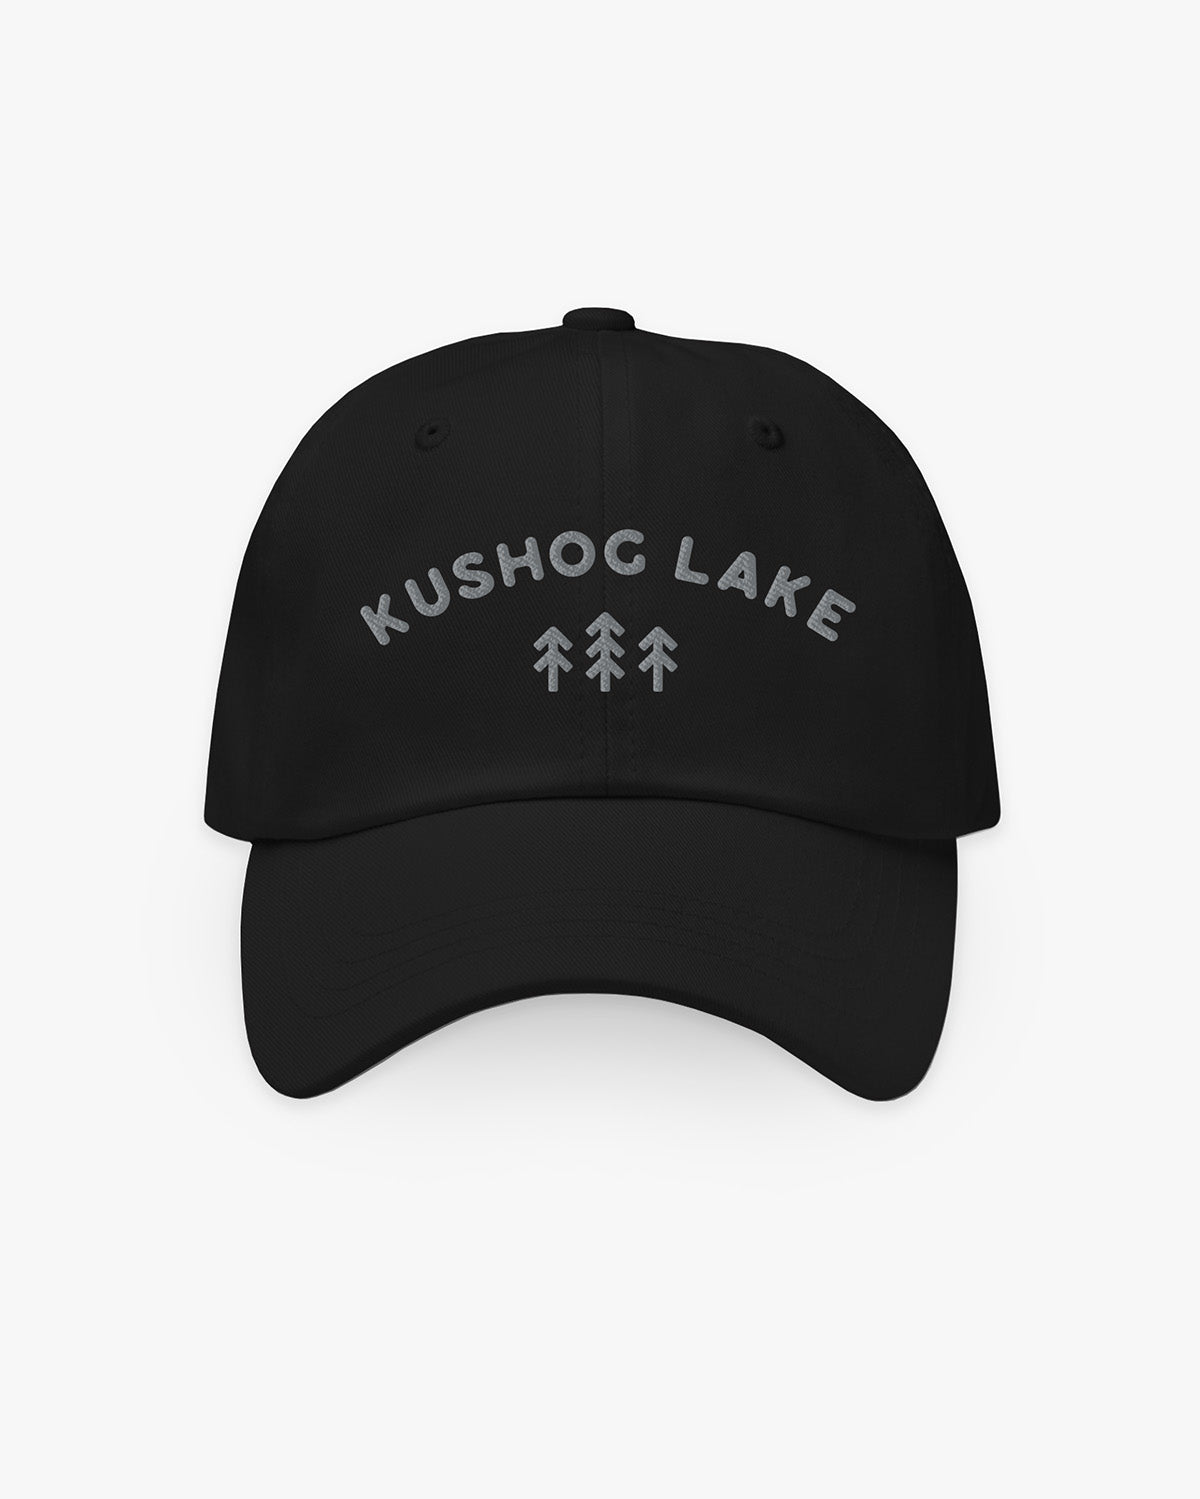 Trees - Kushog Lake - Hat